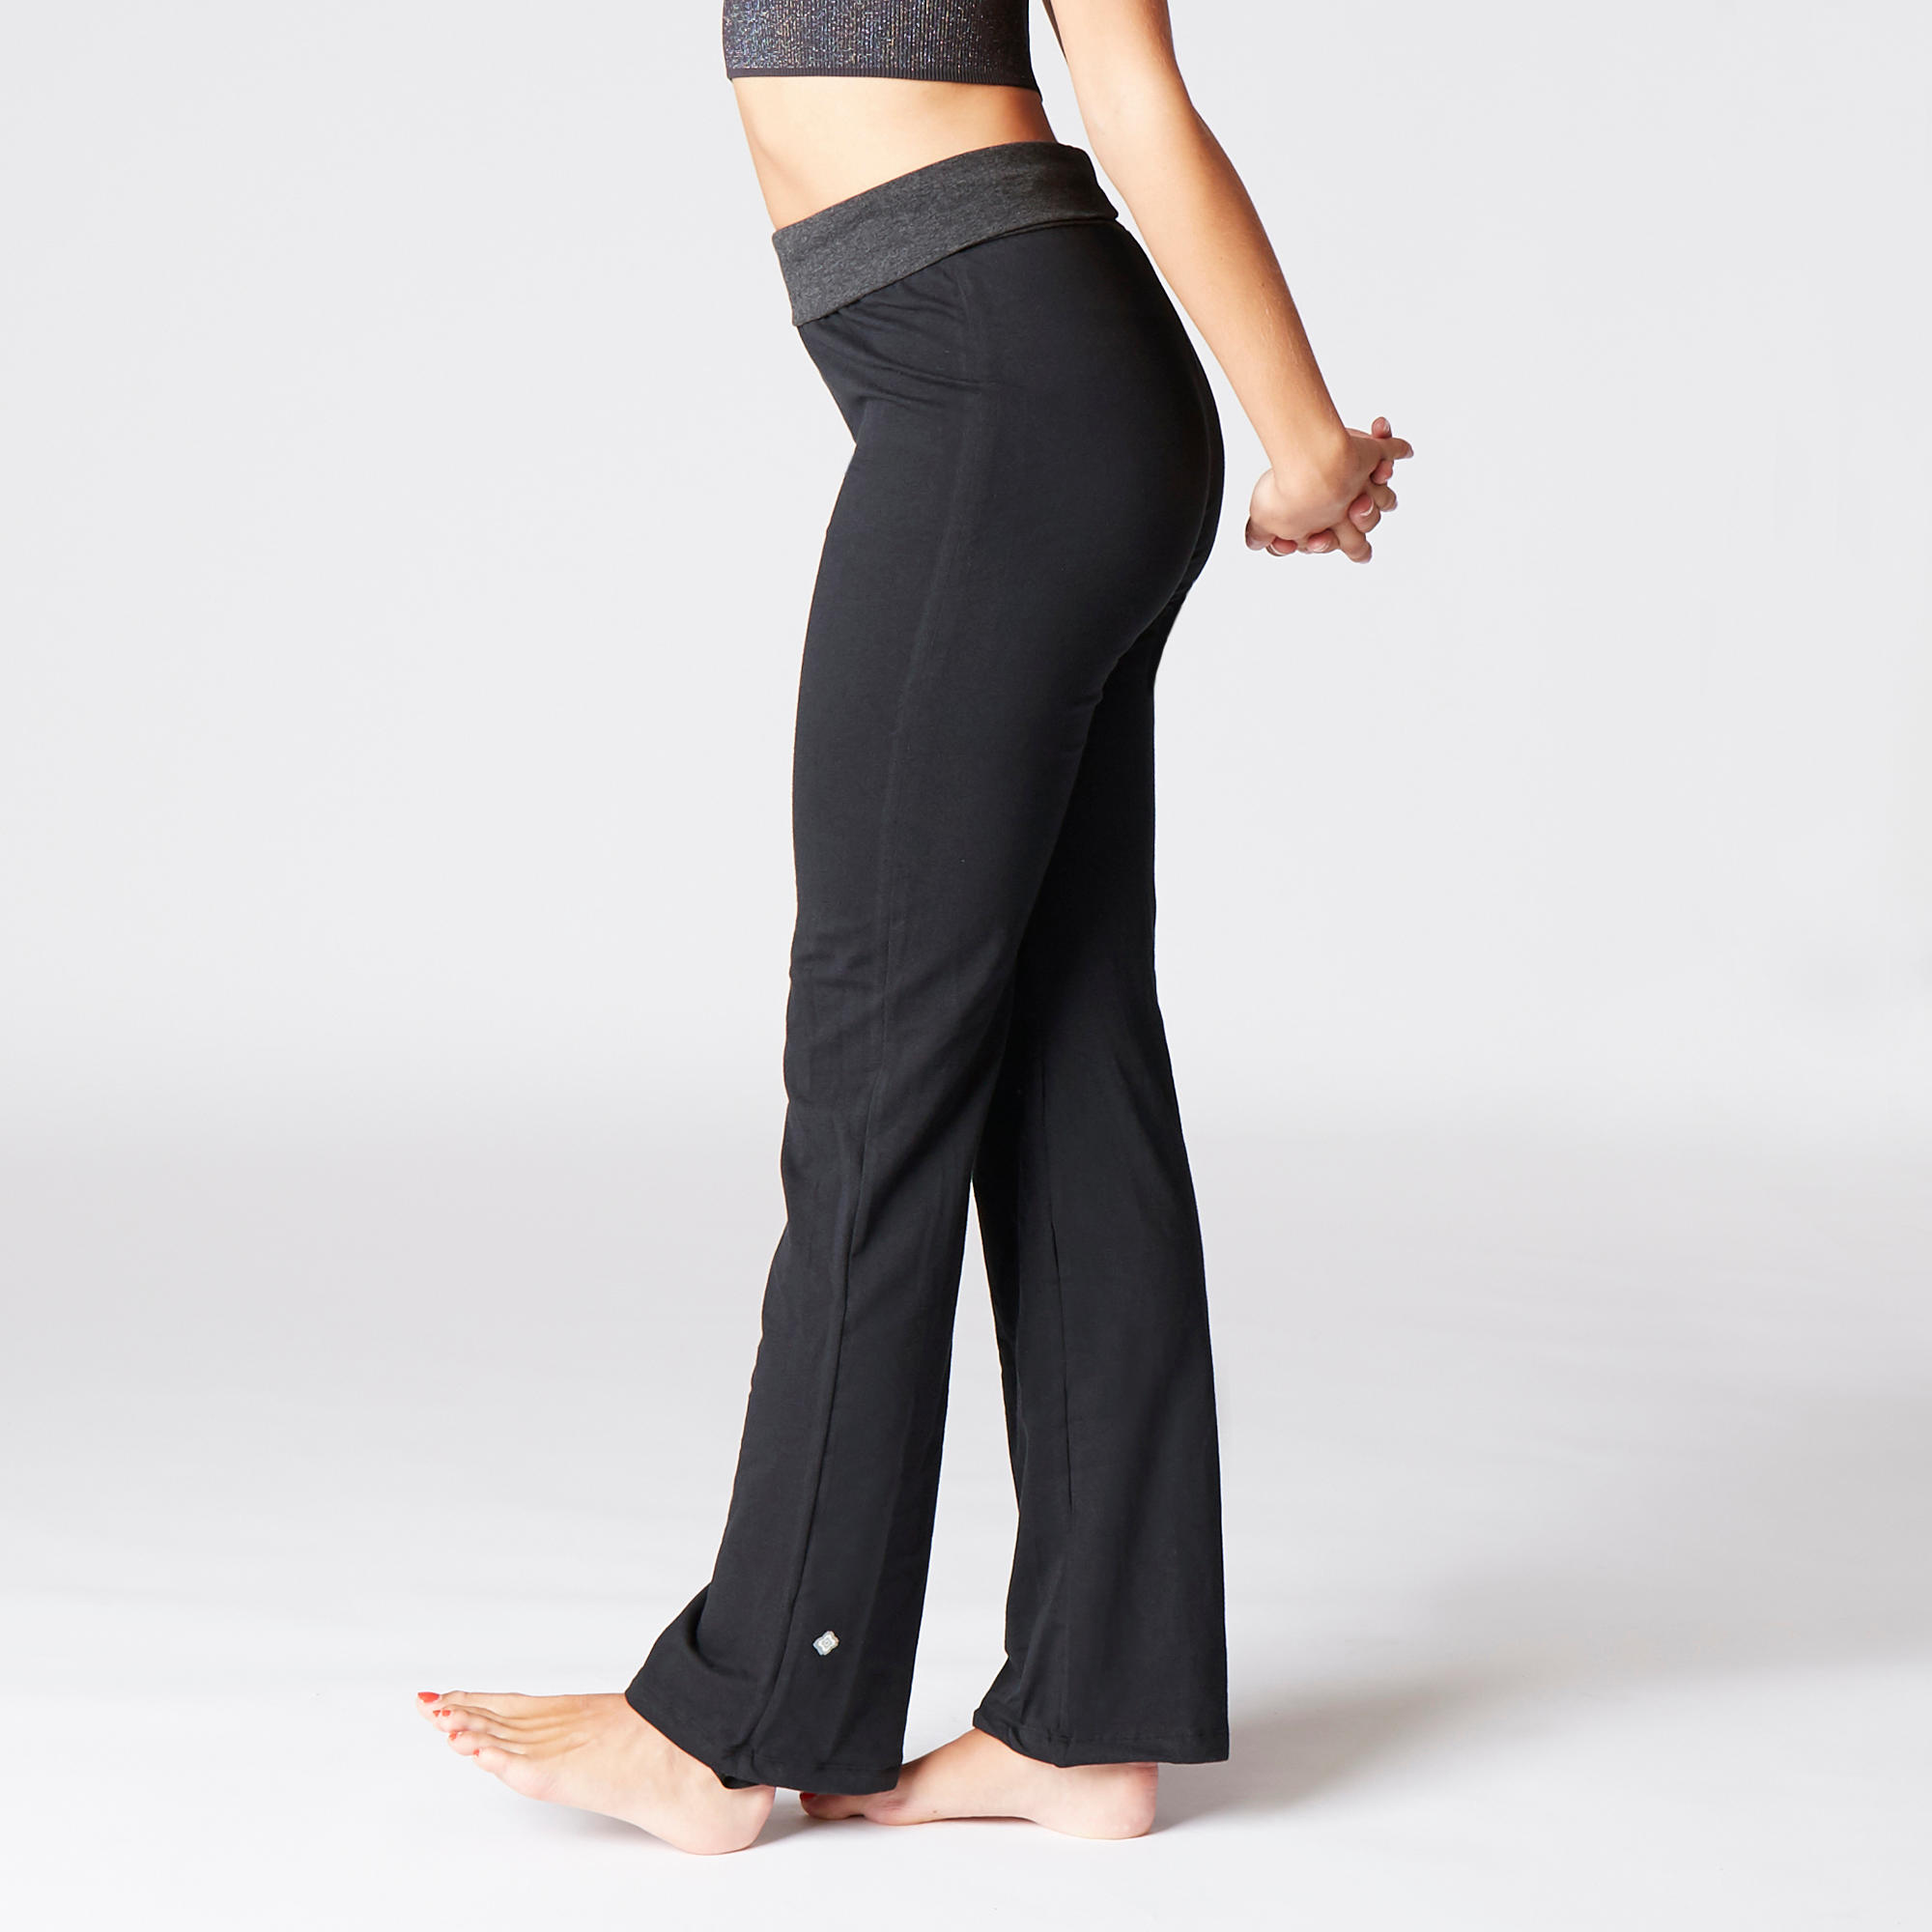 Womens Yoga Pants Buy organic yoga bottoms for women online in India